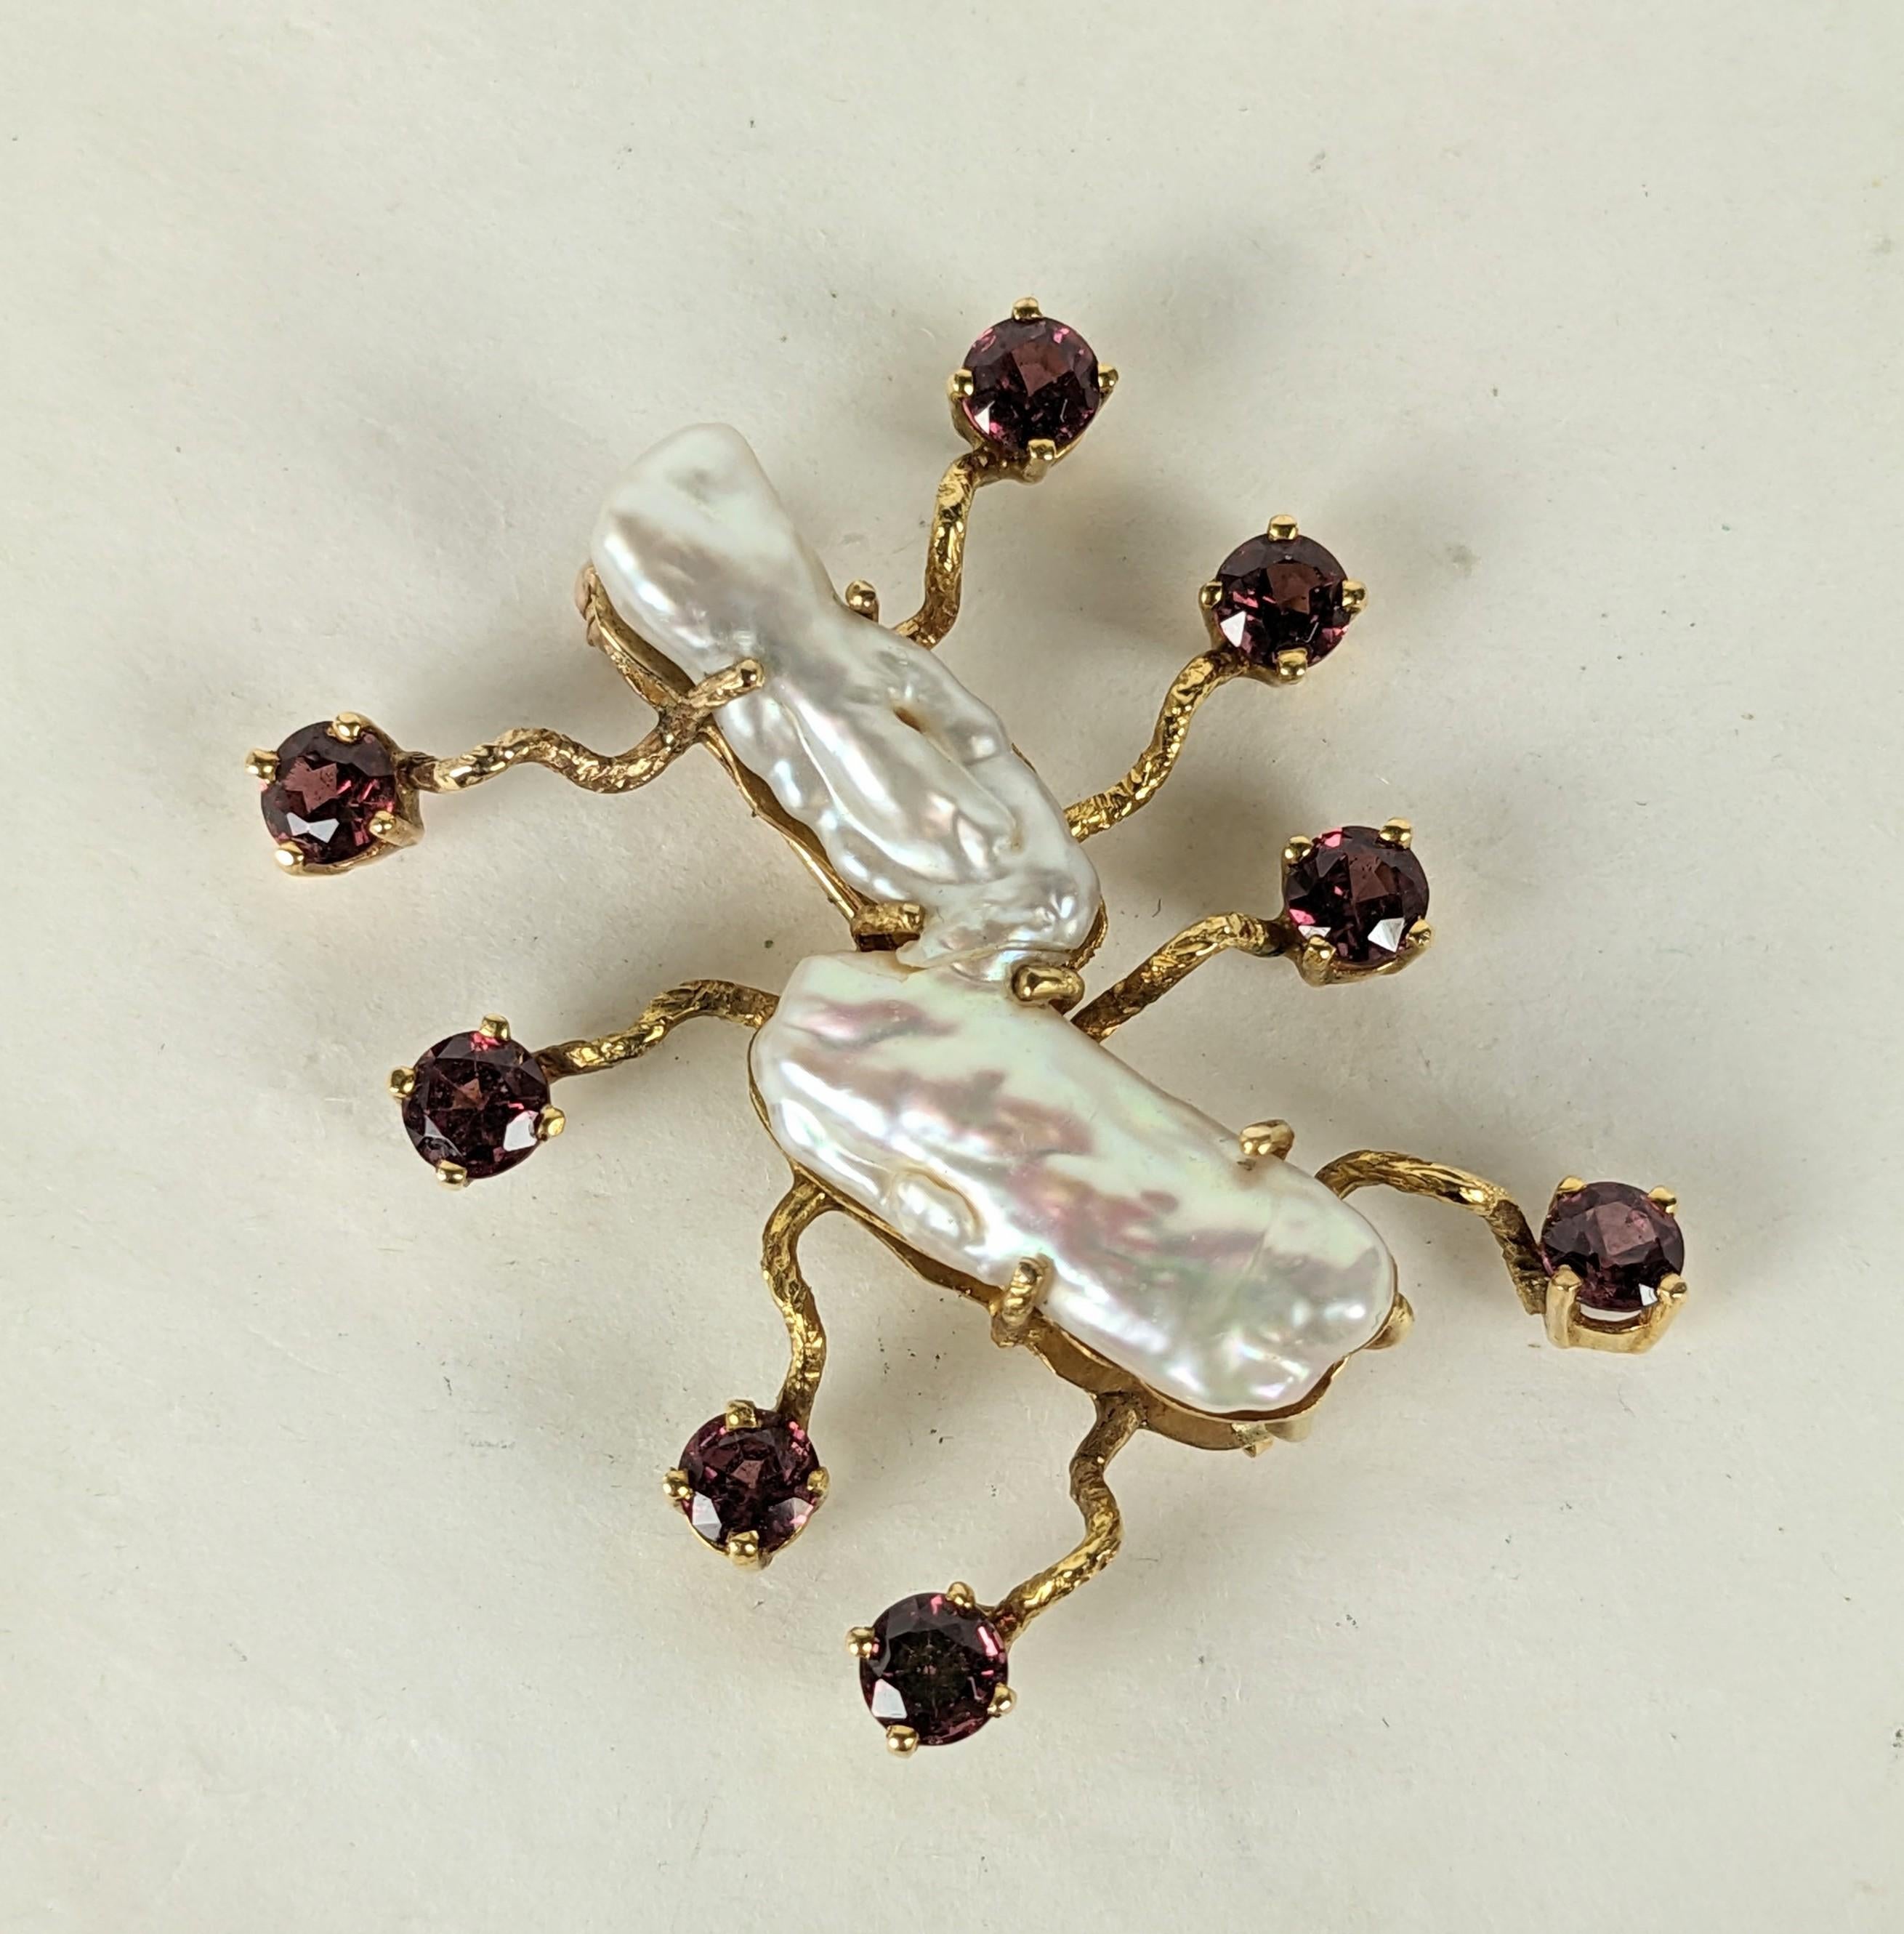 centipede pearl singapore